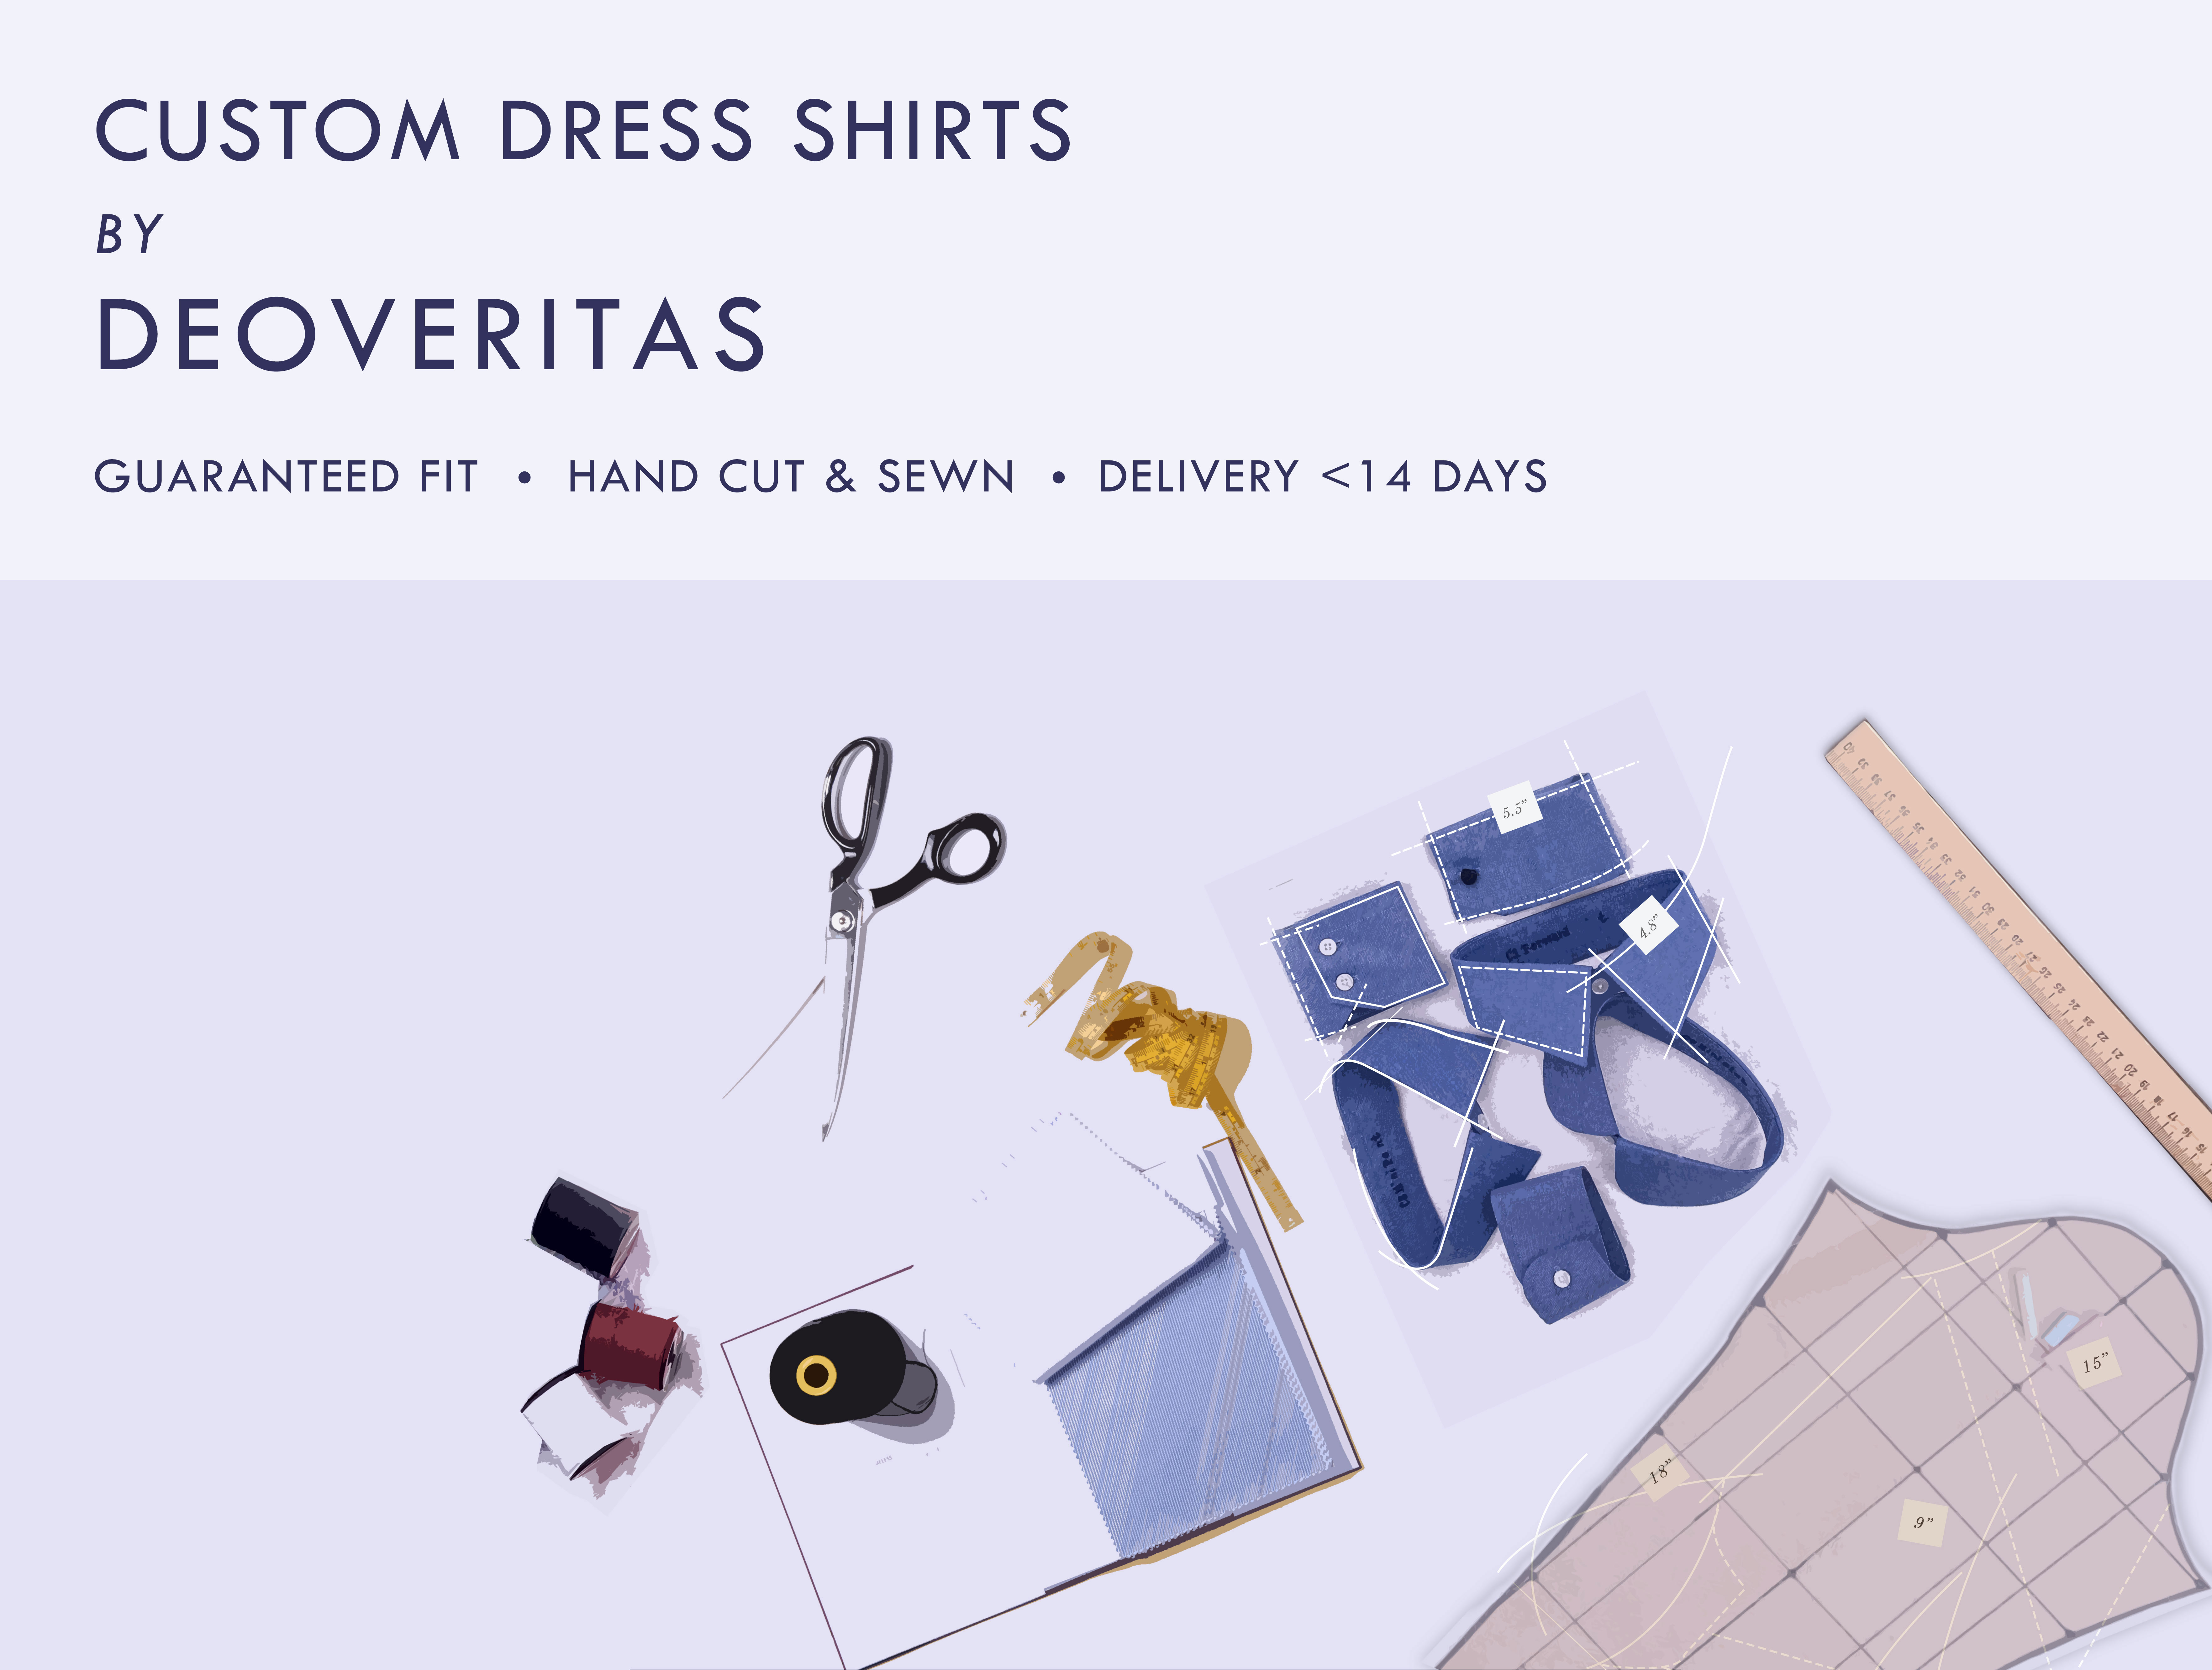 CUSTOM DRESS SHIRTS BY DEO VERITAS